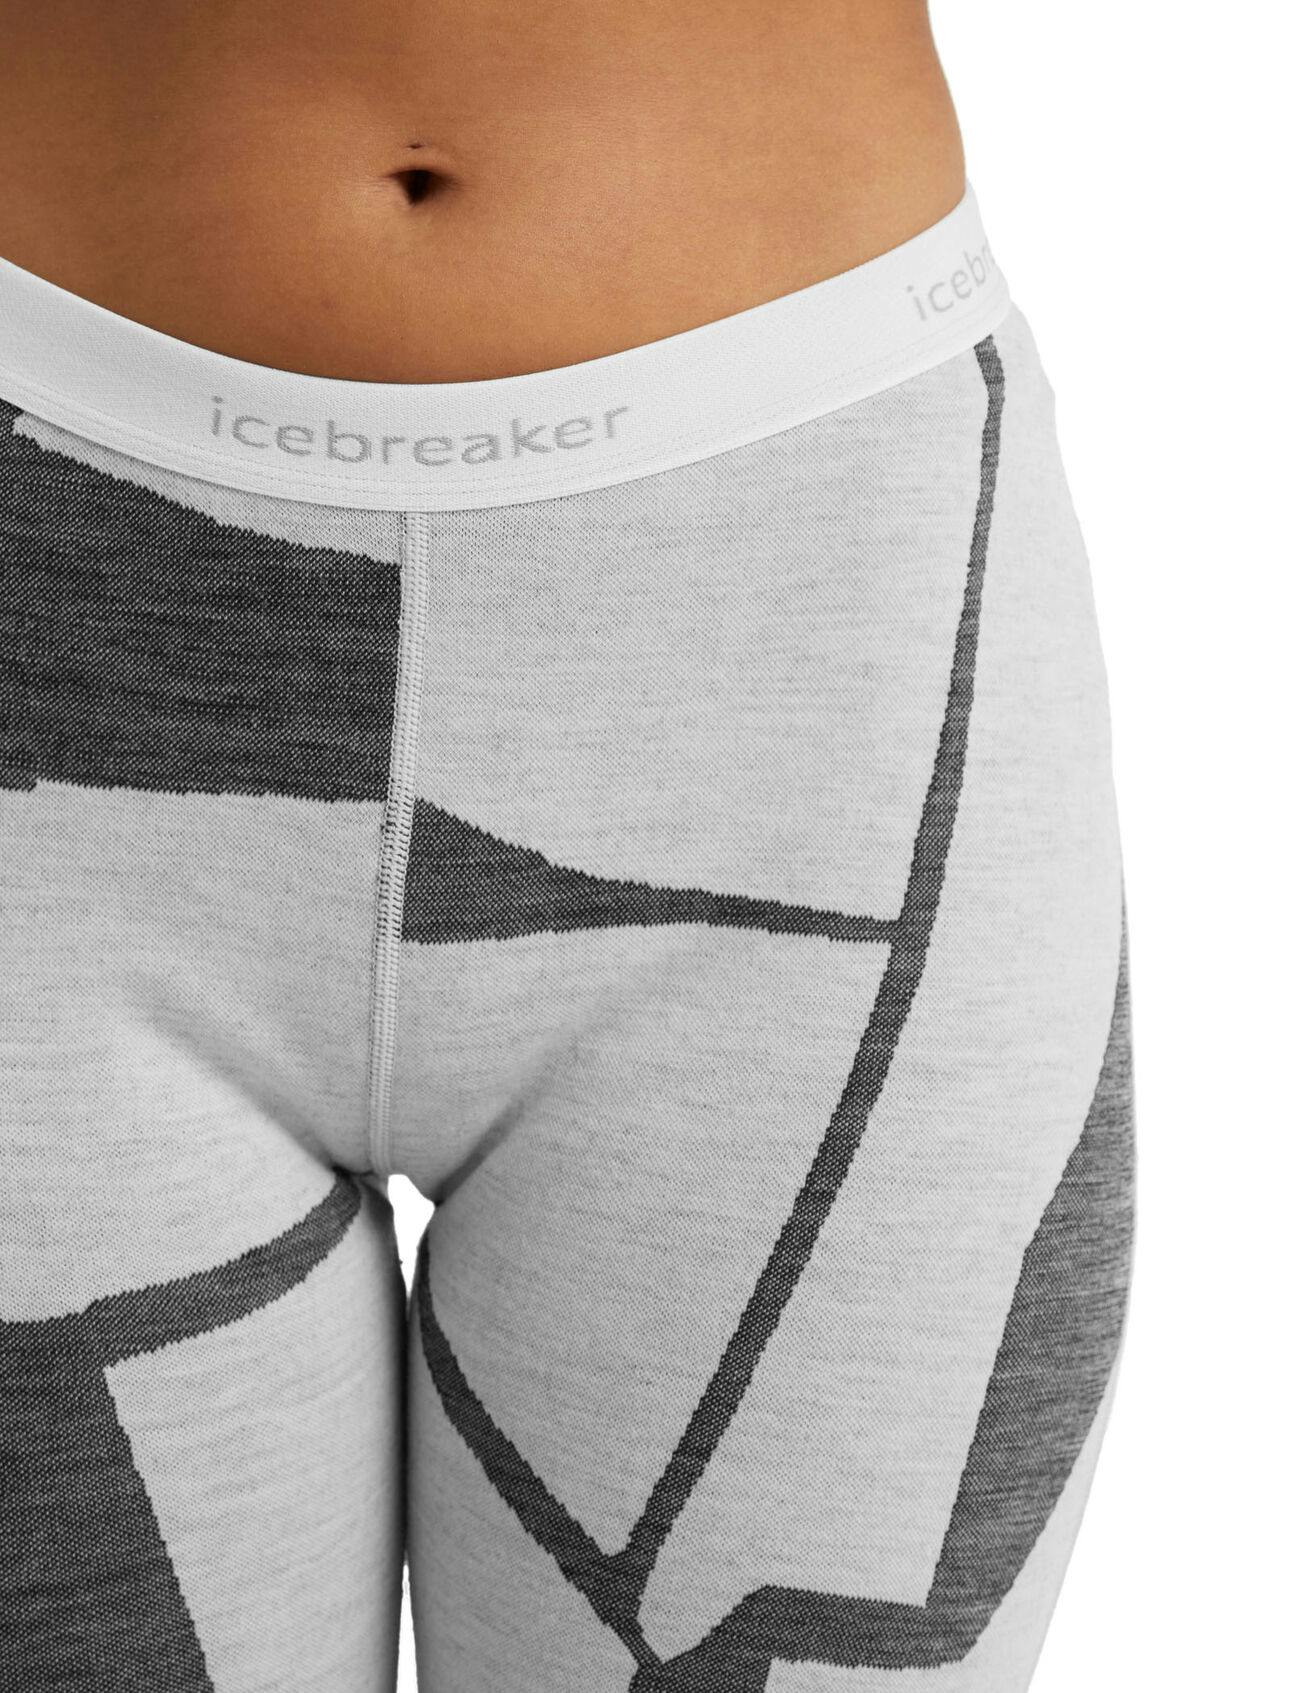 Icebreaker 250 Vertex Into the Deep Thermal Leggings - Women's - Clothing